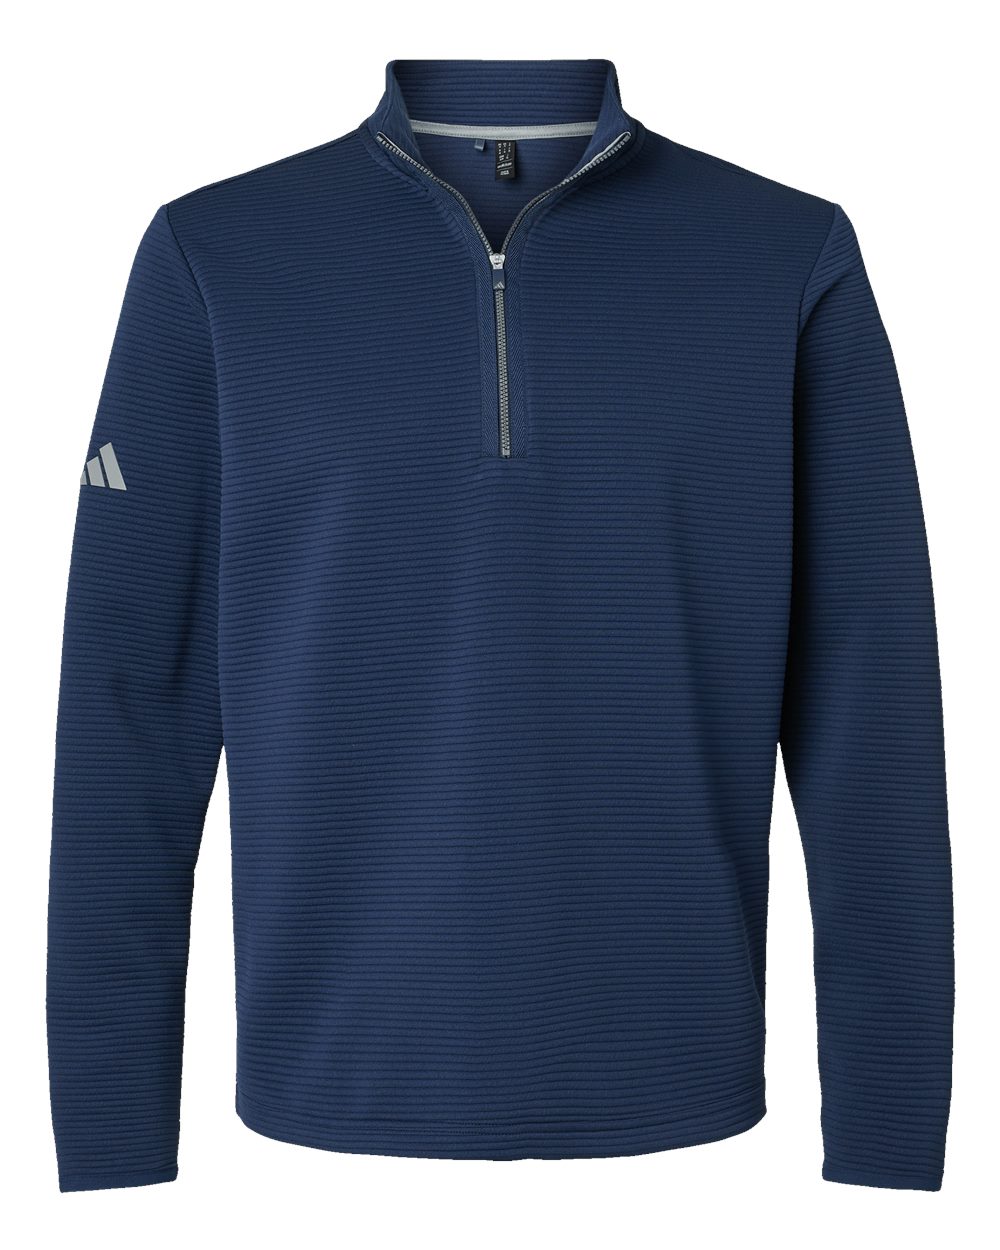 Adidas A588 Spacer Quarter-Zip Pullover #color_Collegiate Navy